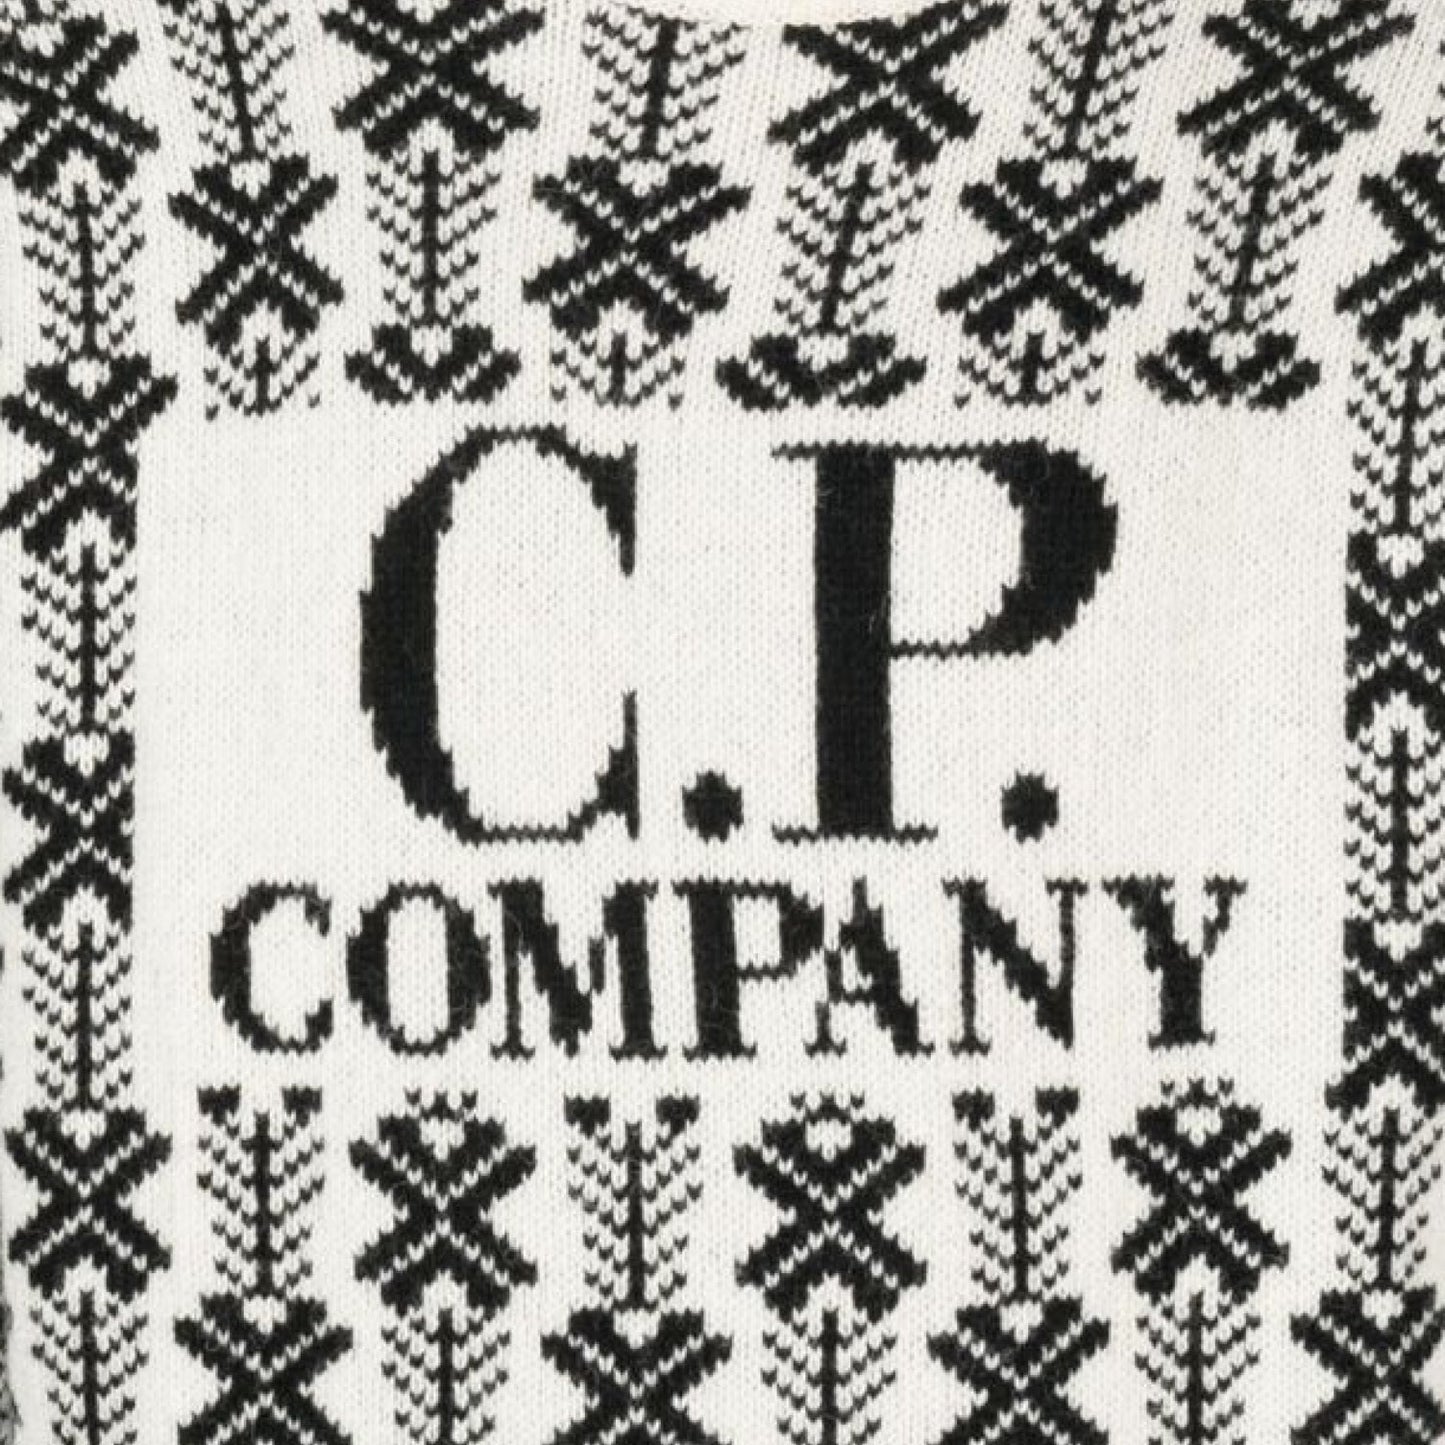 C.P. Company Wool Jacquard Logo Knit - V01 White - Escape Menswear